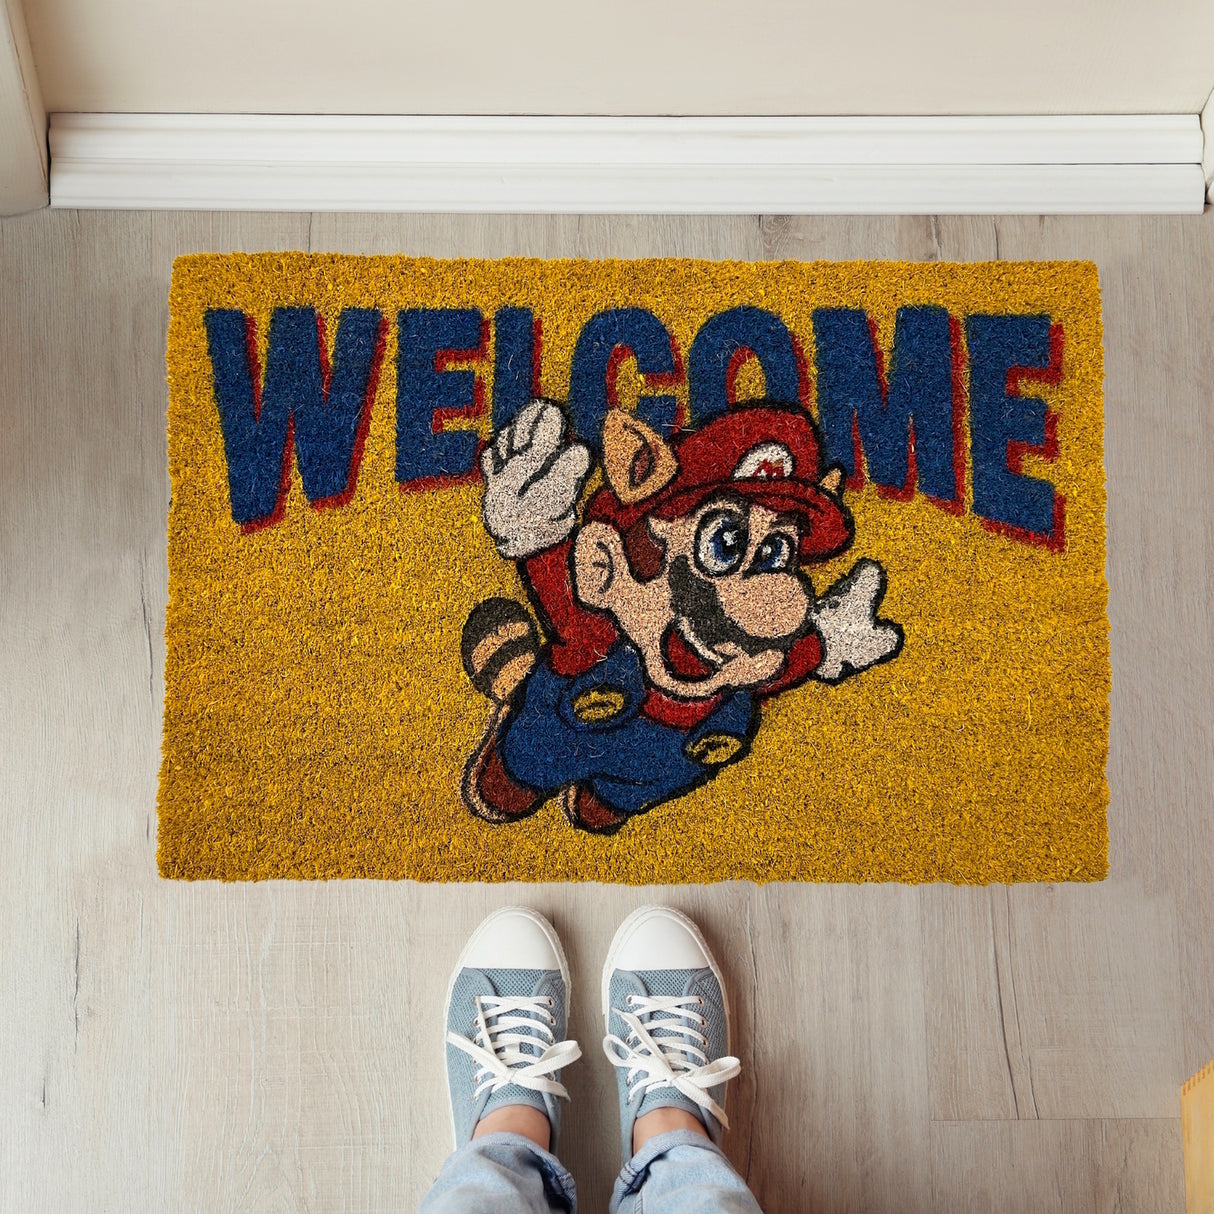 Super Mario Bros. 3 Welcome Fußmatte